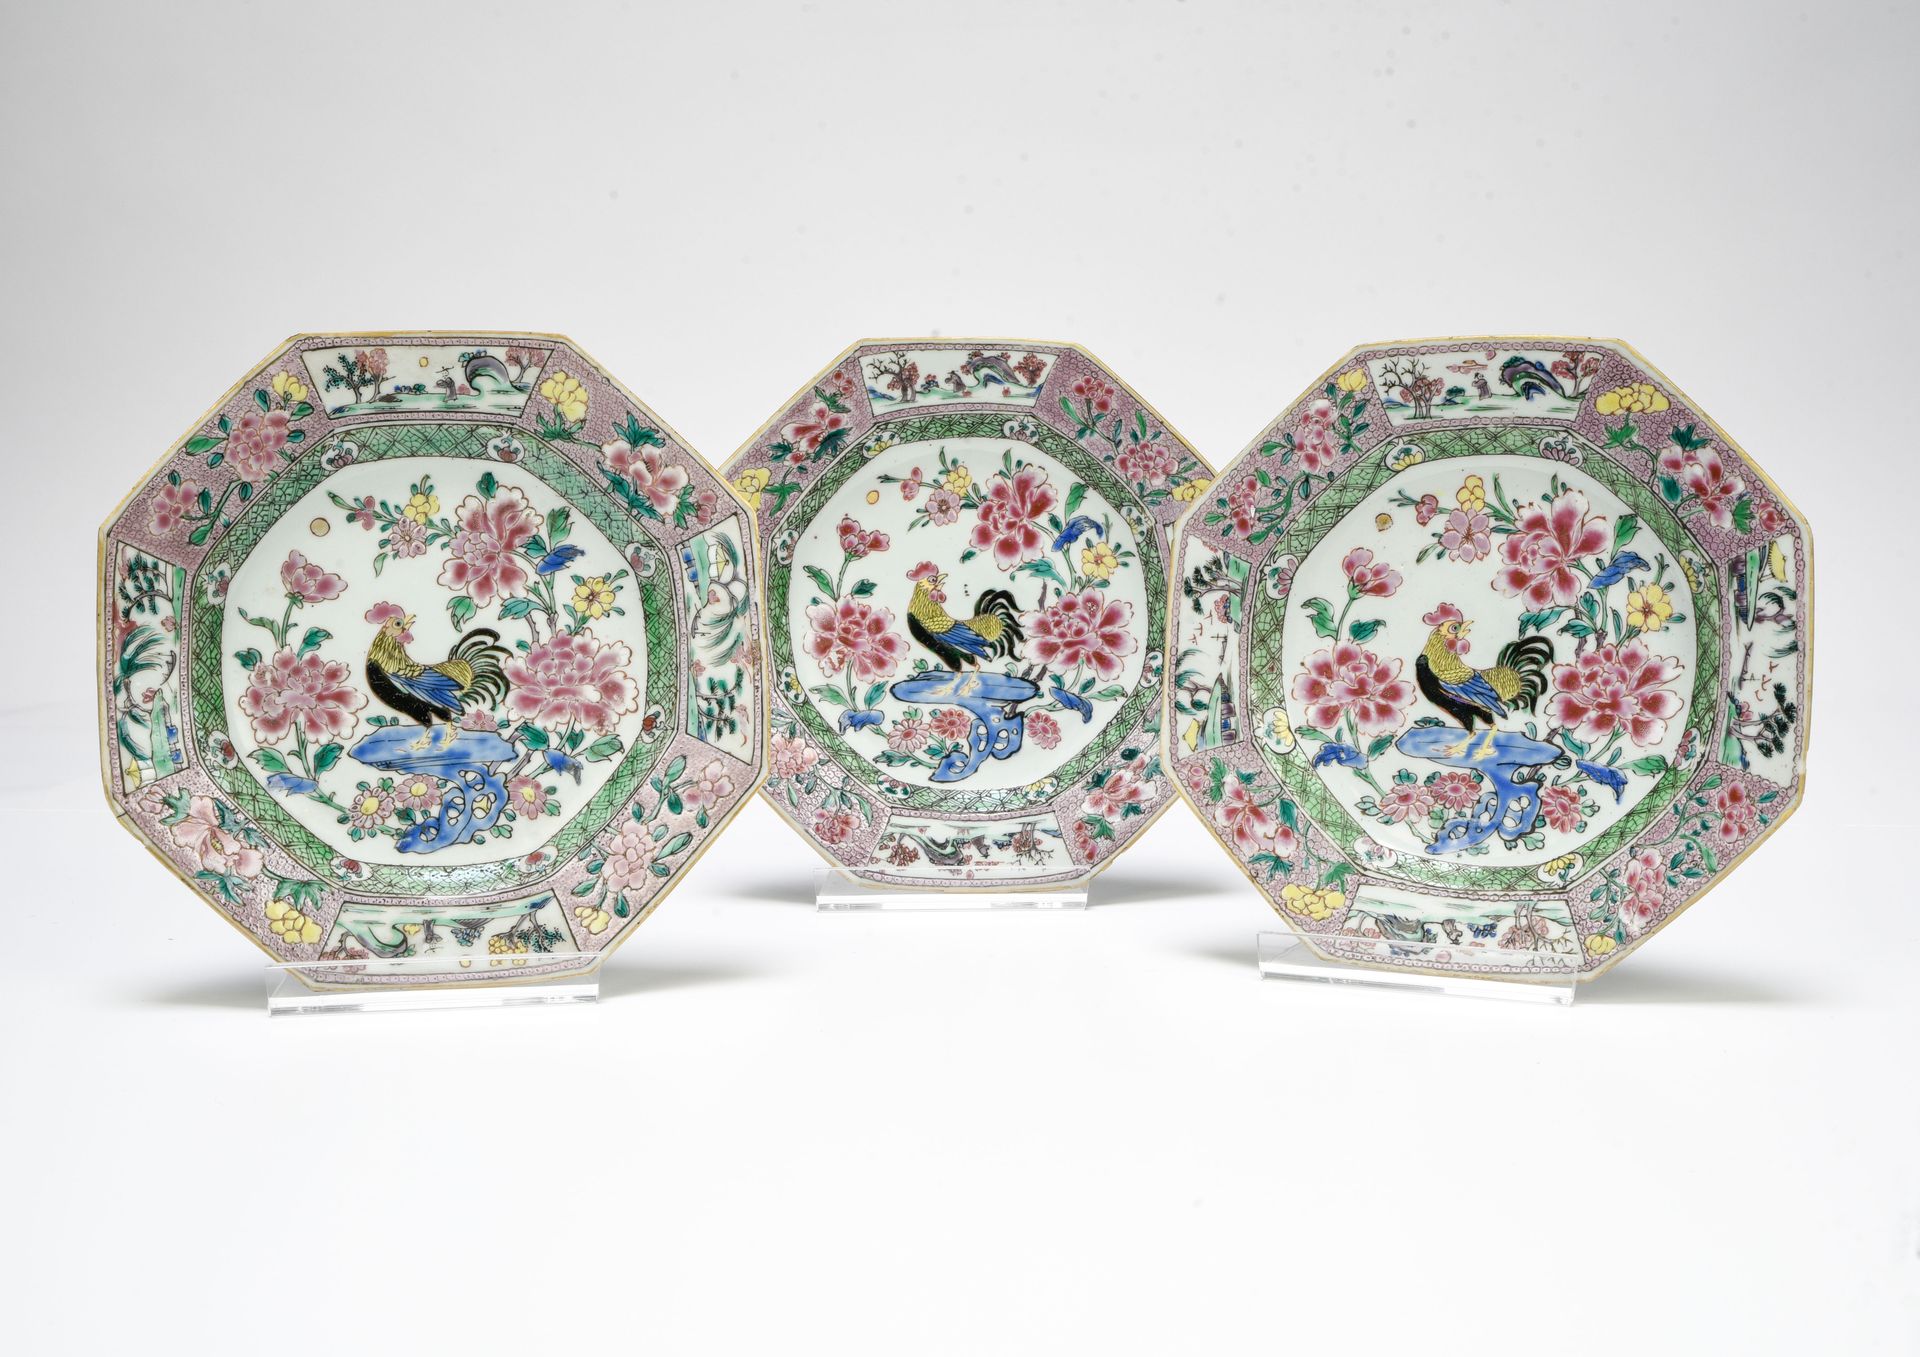 Null 中国，印度公司--雍正时期(1723 - 1735)

三块八角形板



珐琅彩瓷器，有一只公鸡在岩石上盛开的牡丹。翼楼在牡丹花的背景上装饰着四个学&hellip;